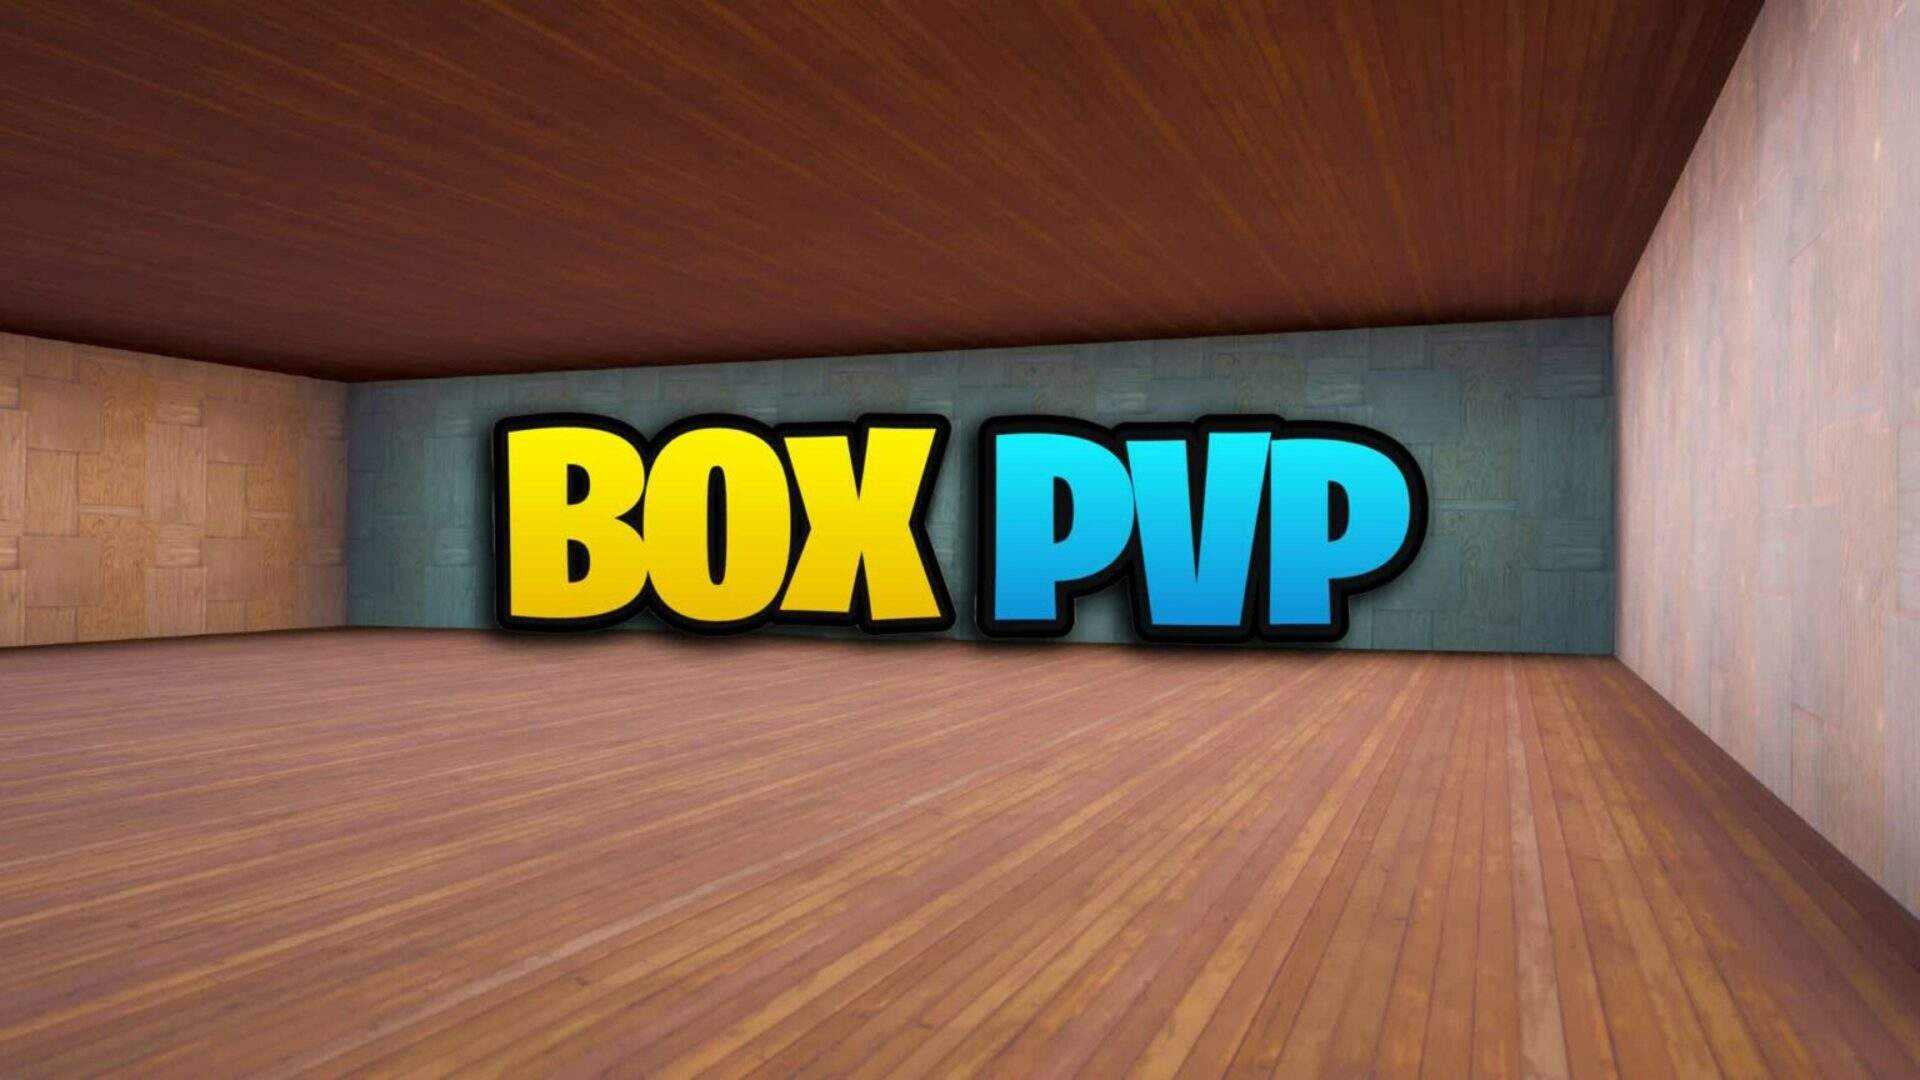 BOX FIGHT PVP 📦